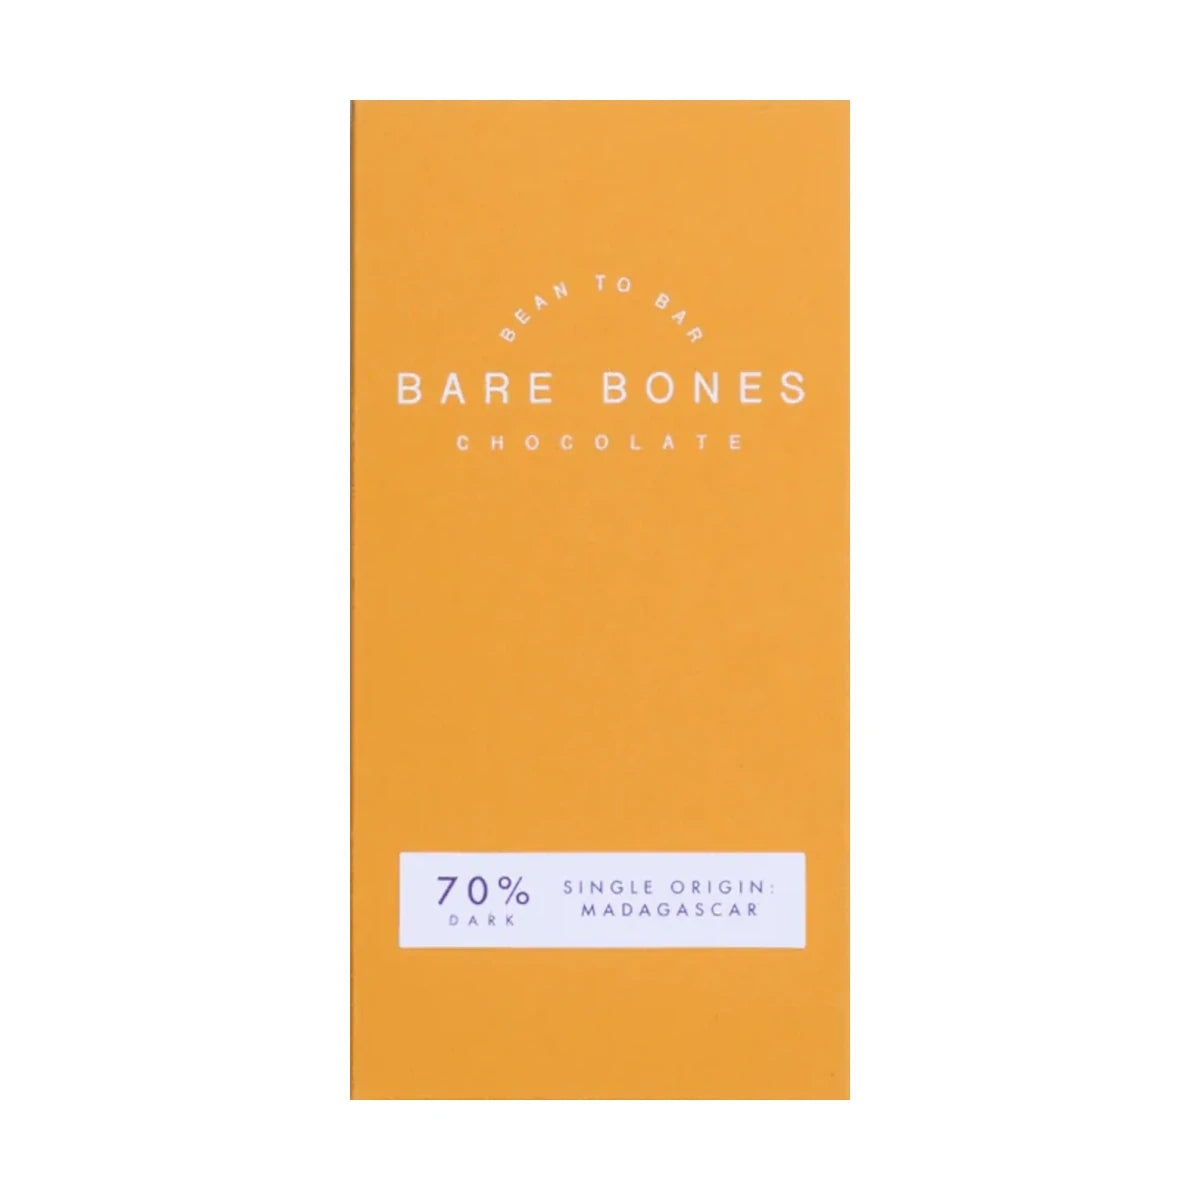 Madagascar 70% Dark Chocolate | 70g | by Bare Bones - Lifestory